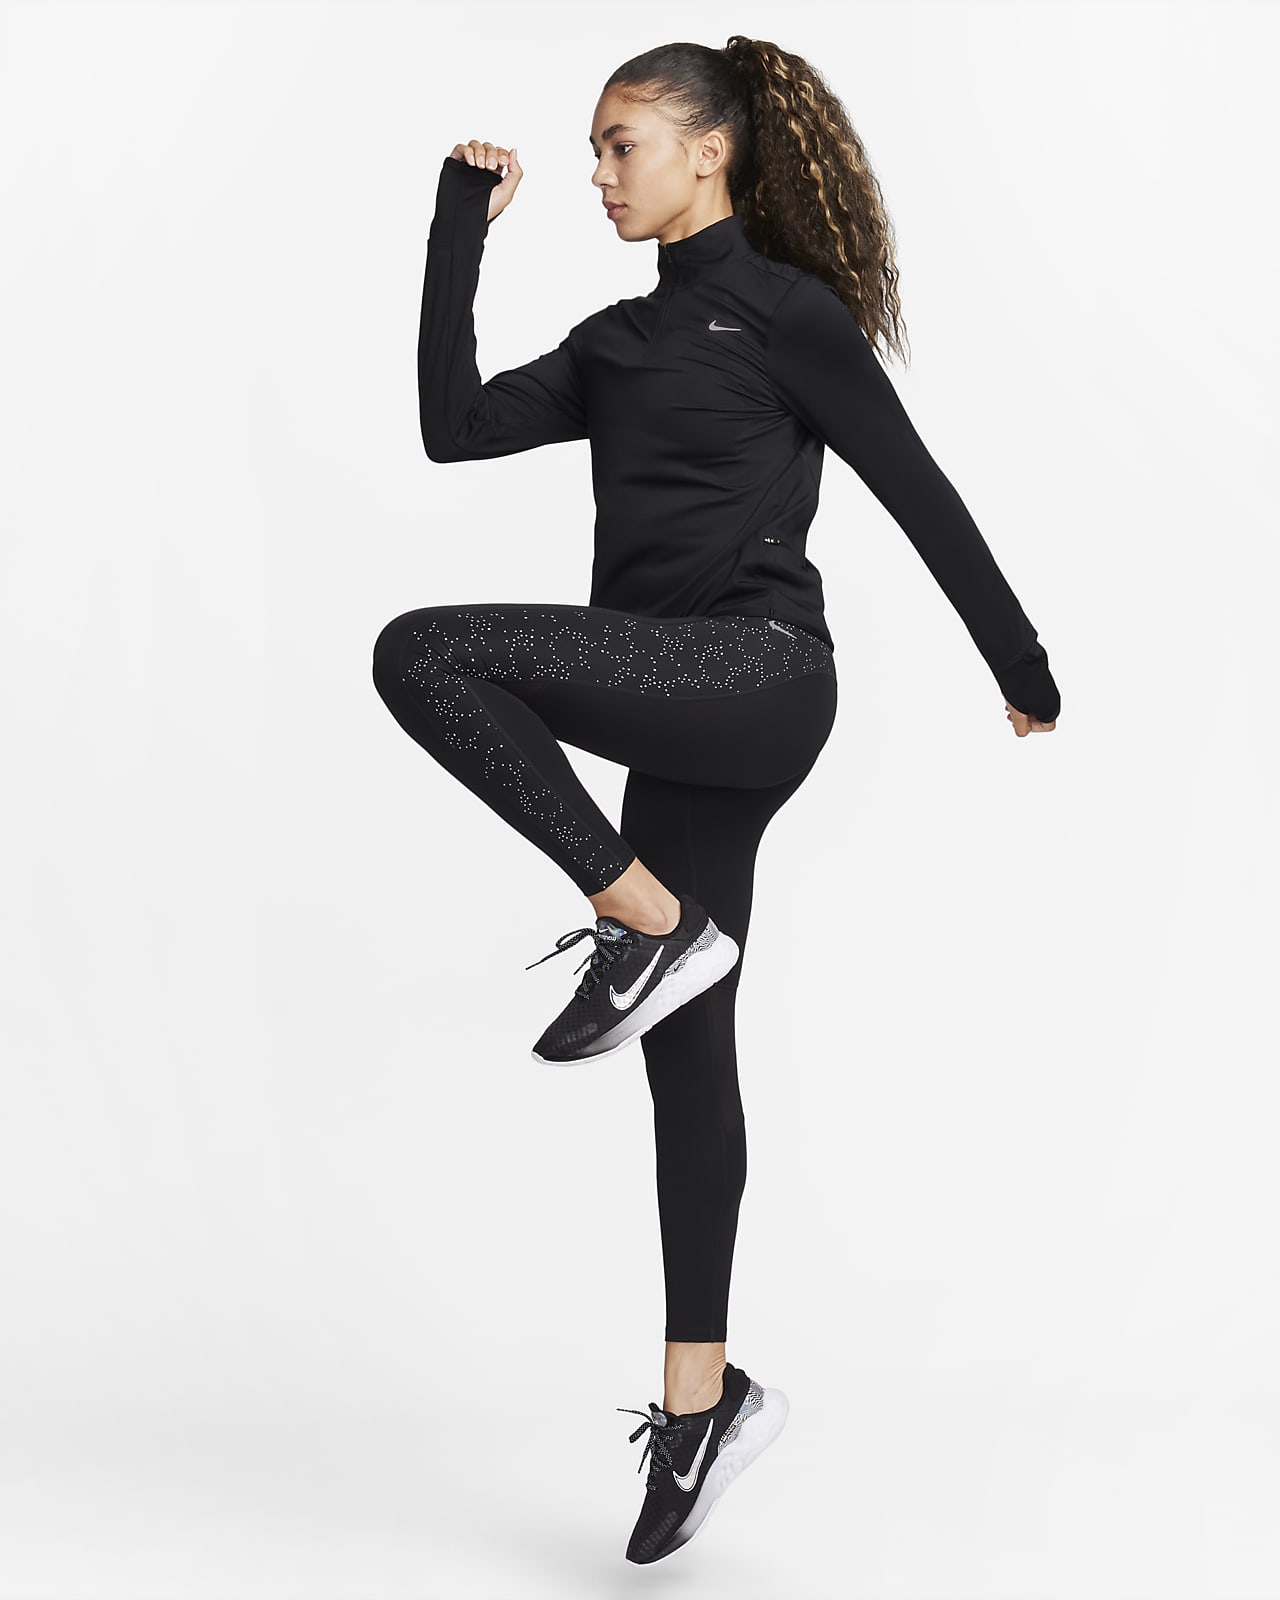 Nike Pro Women's Icon Clash Metallic Print Fast Training Leggings